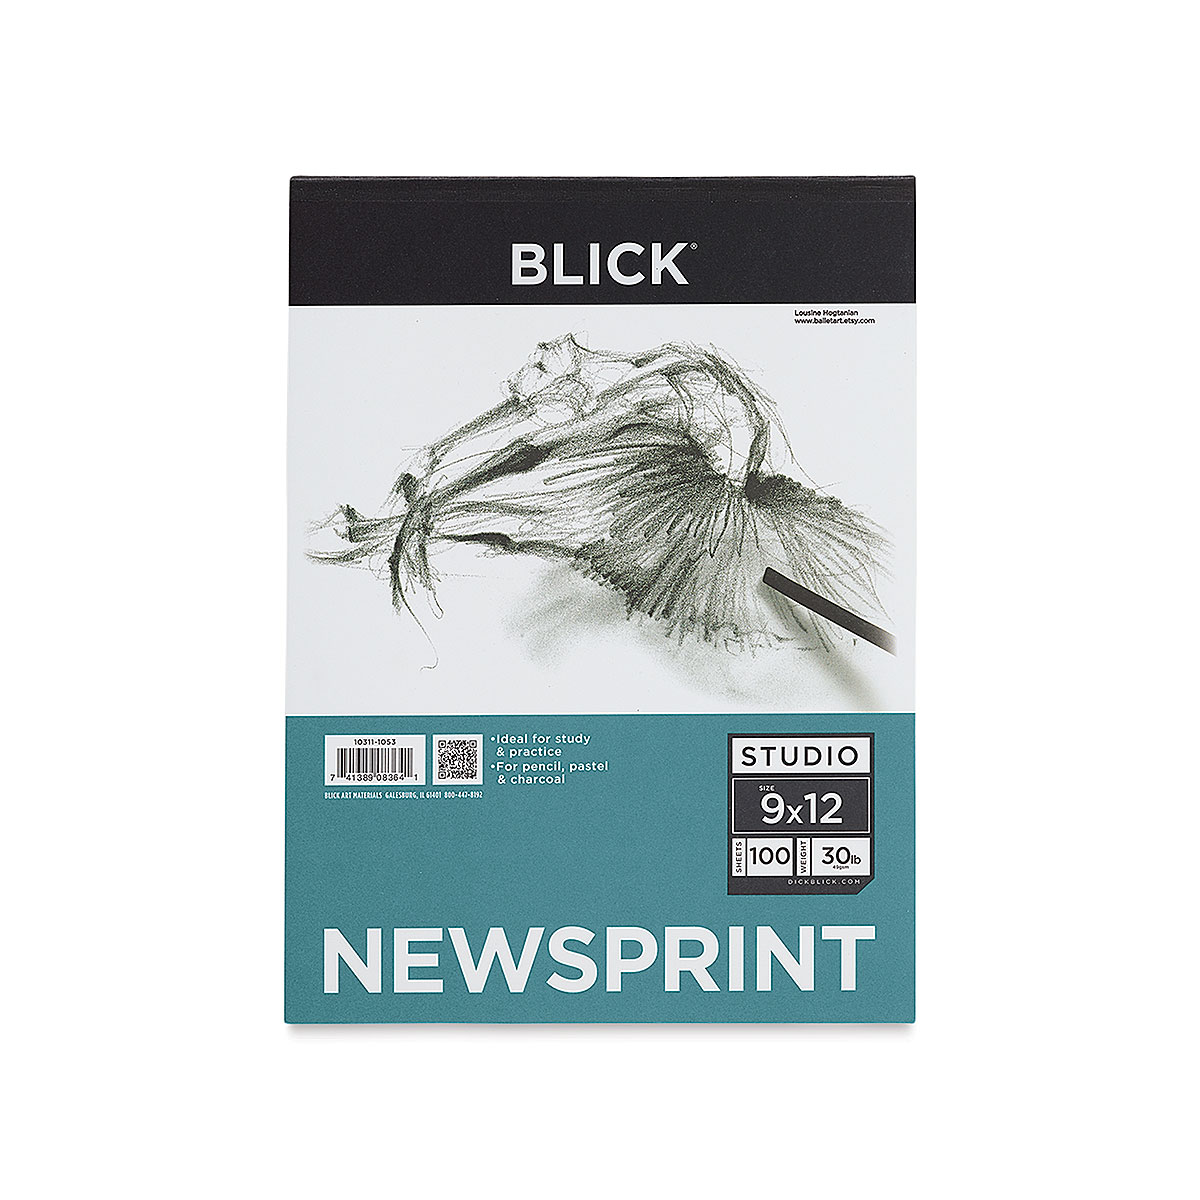 Pacon All-Purpose Newsprint Sheets